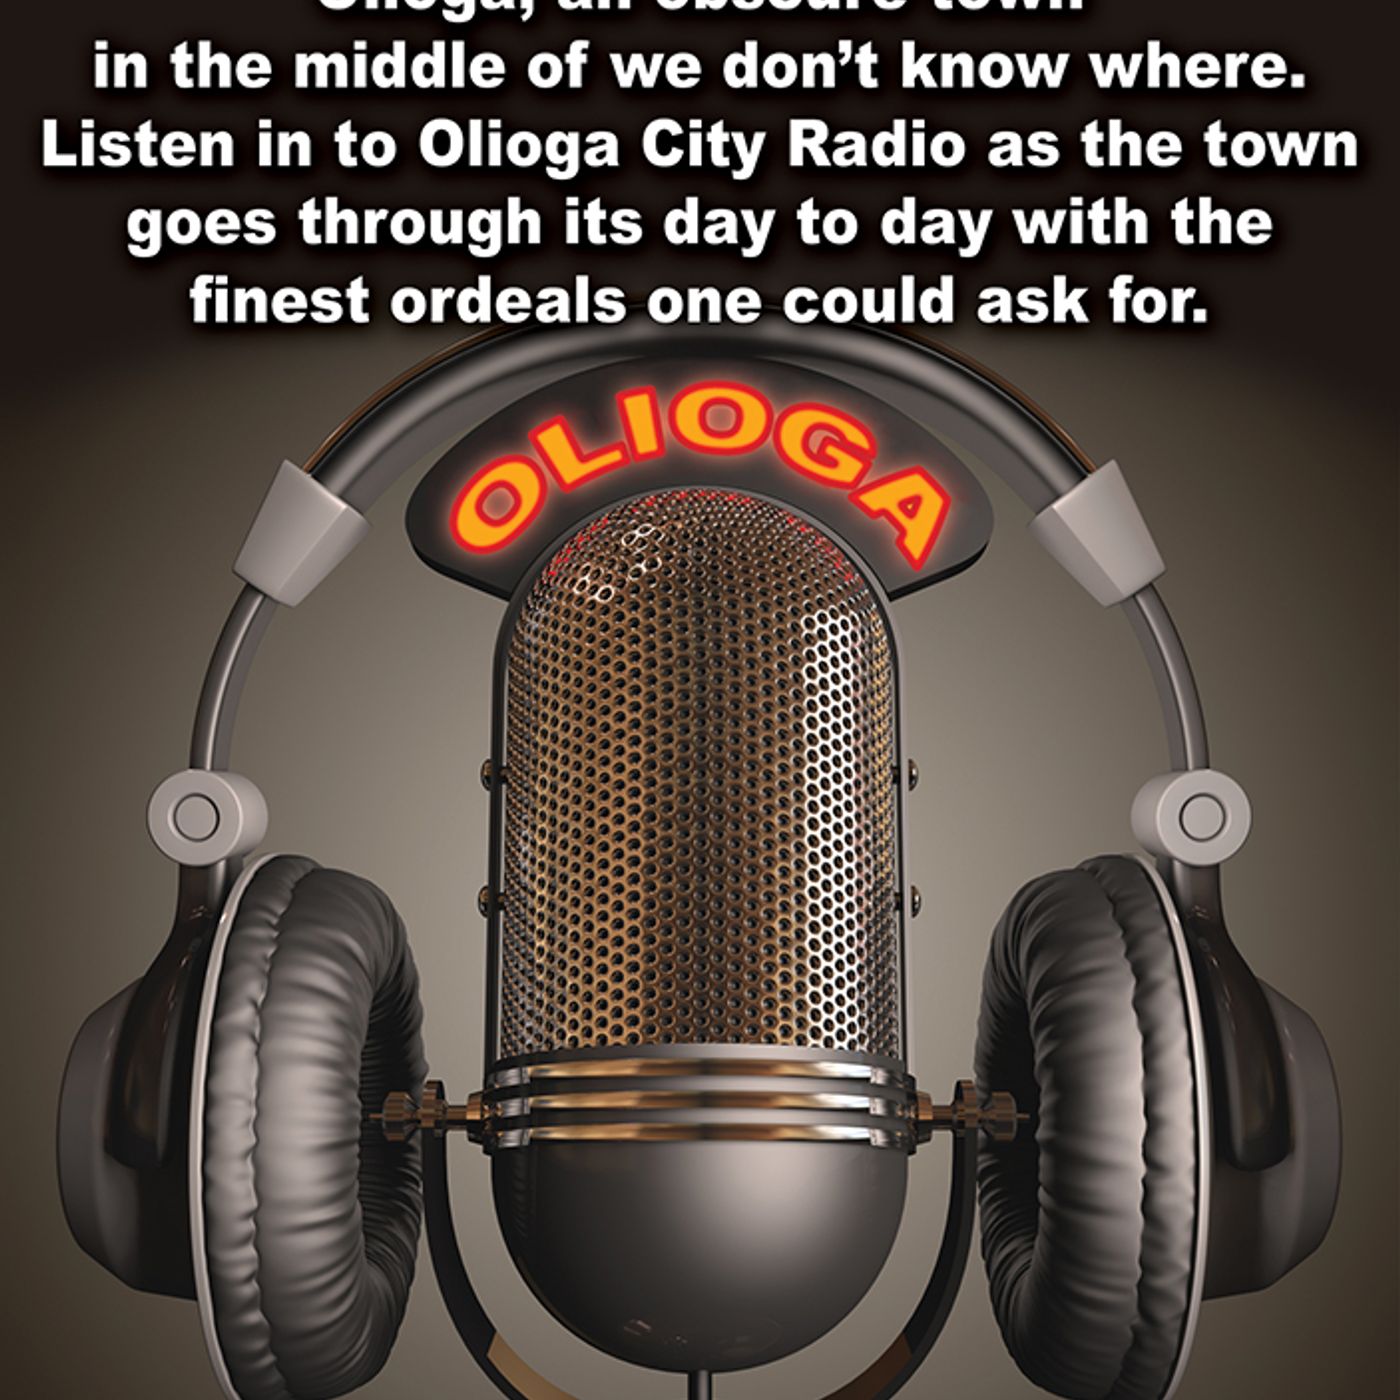 Olioga City Radio